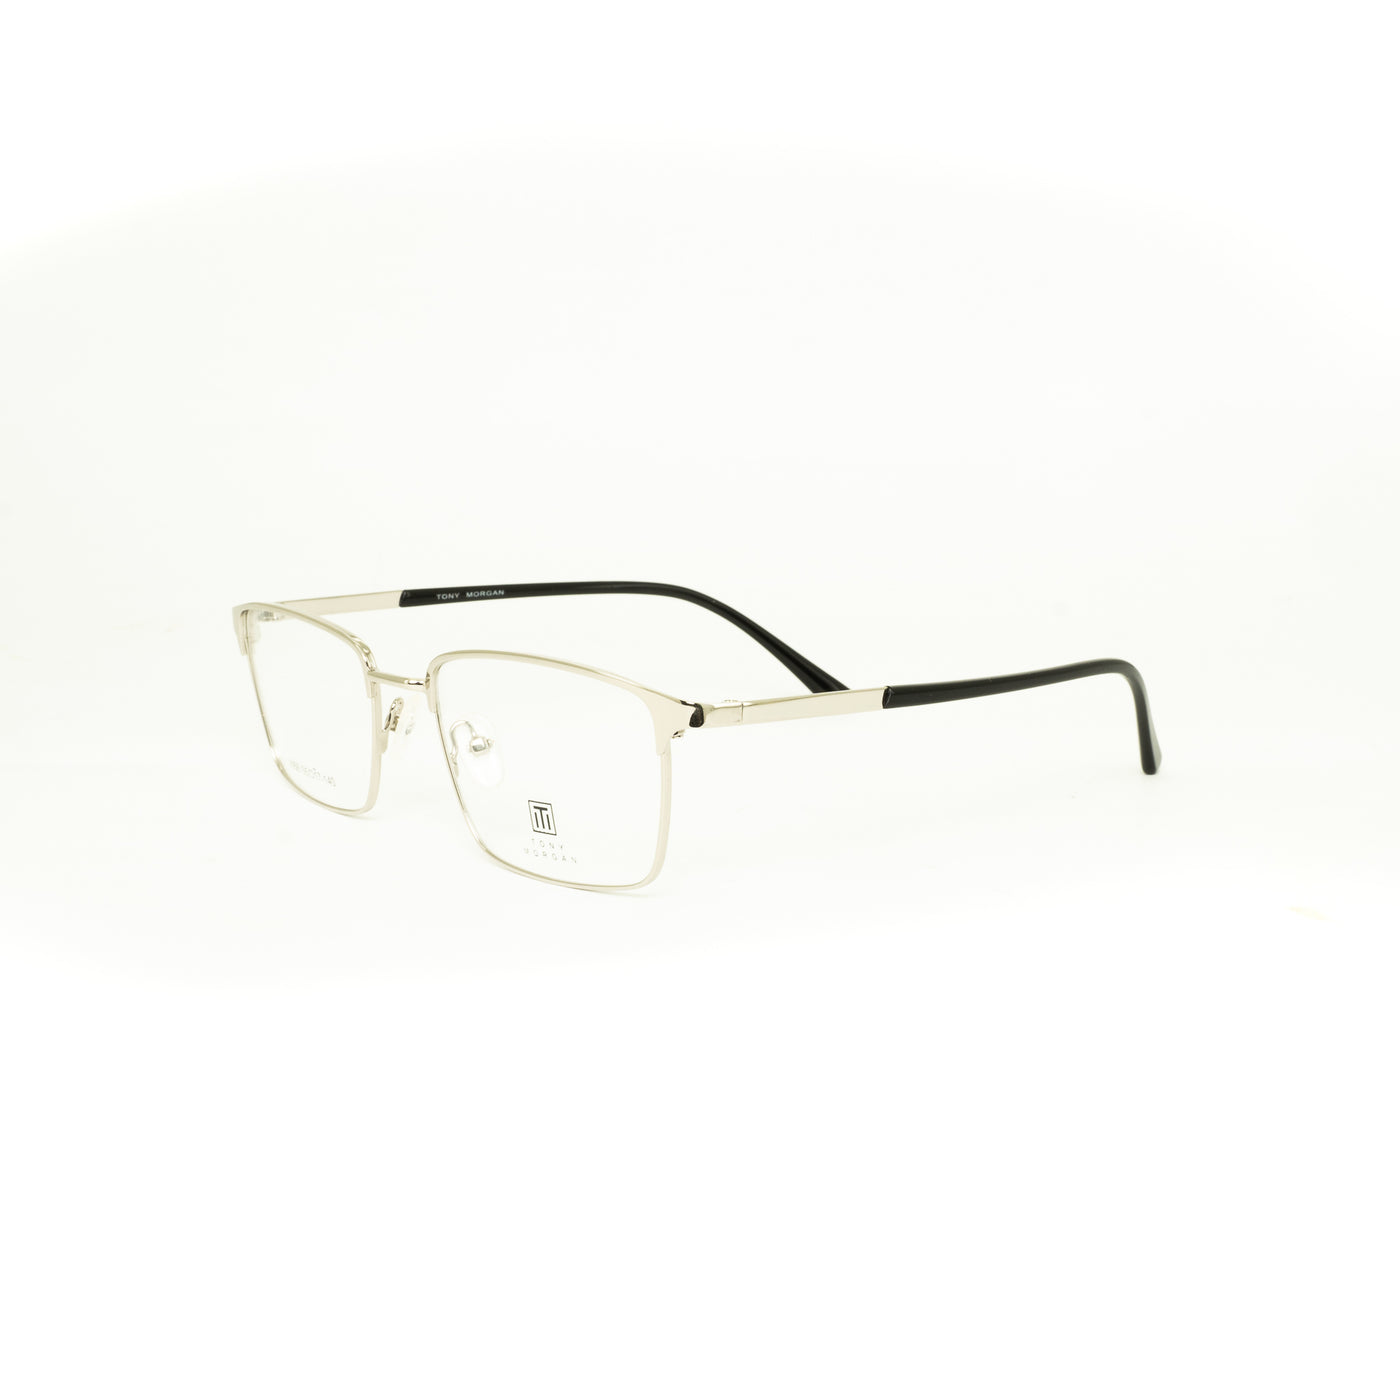 Tony Morgan London TM WYATT/C5 | Eyeglasses - Vision Express Optical Philippines